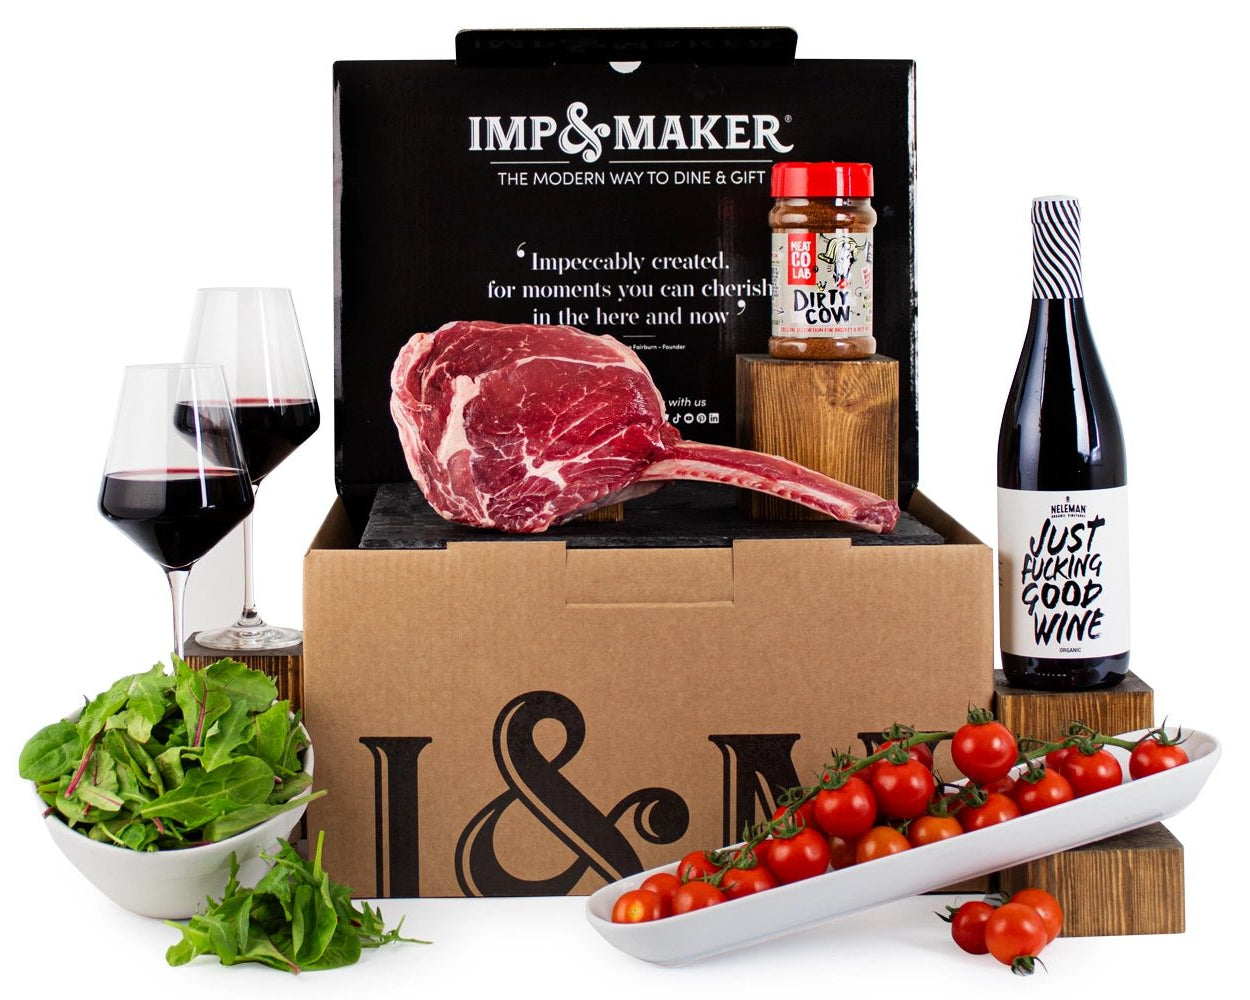 Tomahawk Steak and Wine - IMP & MAKER